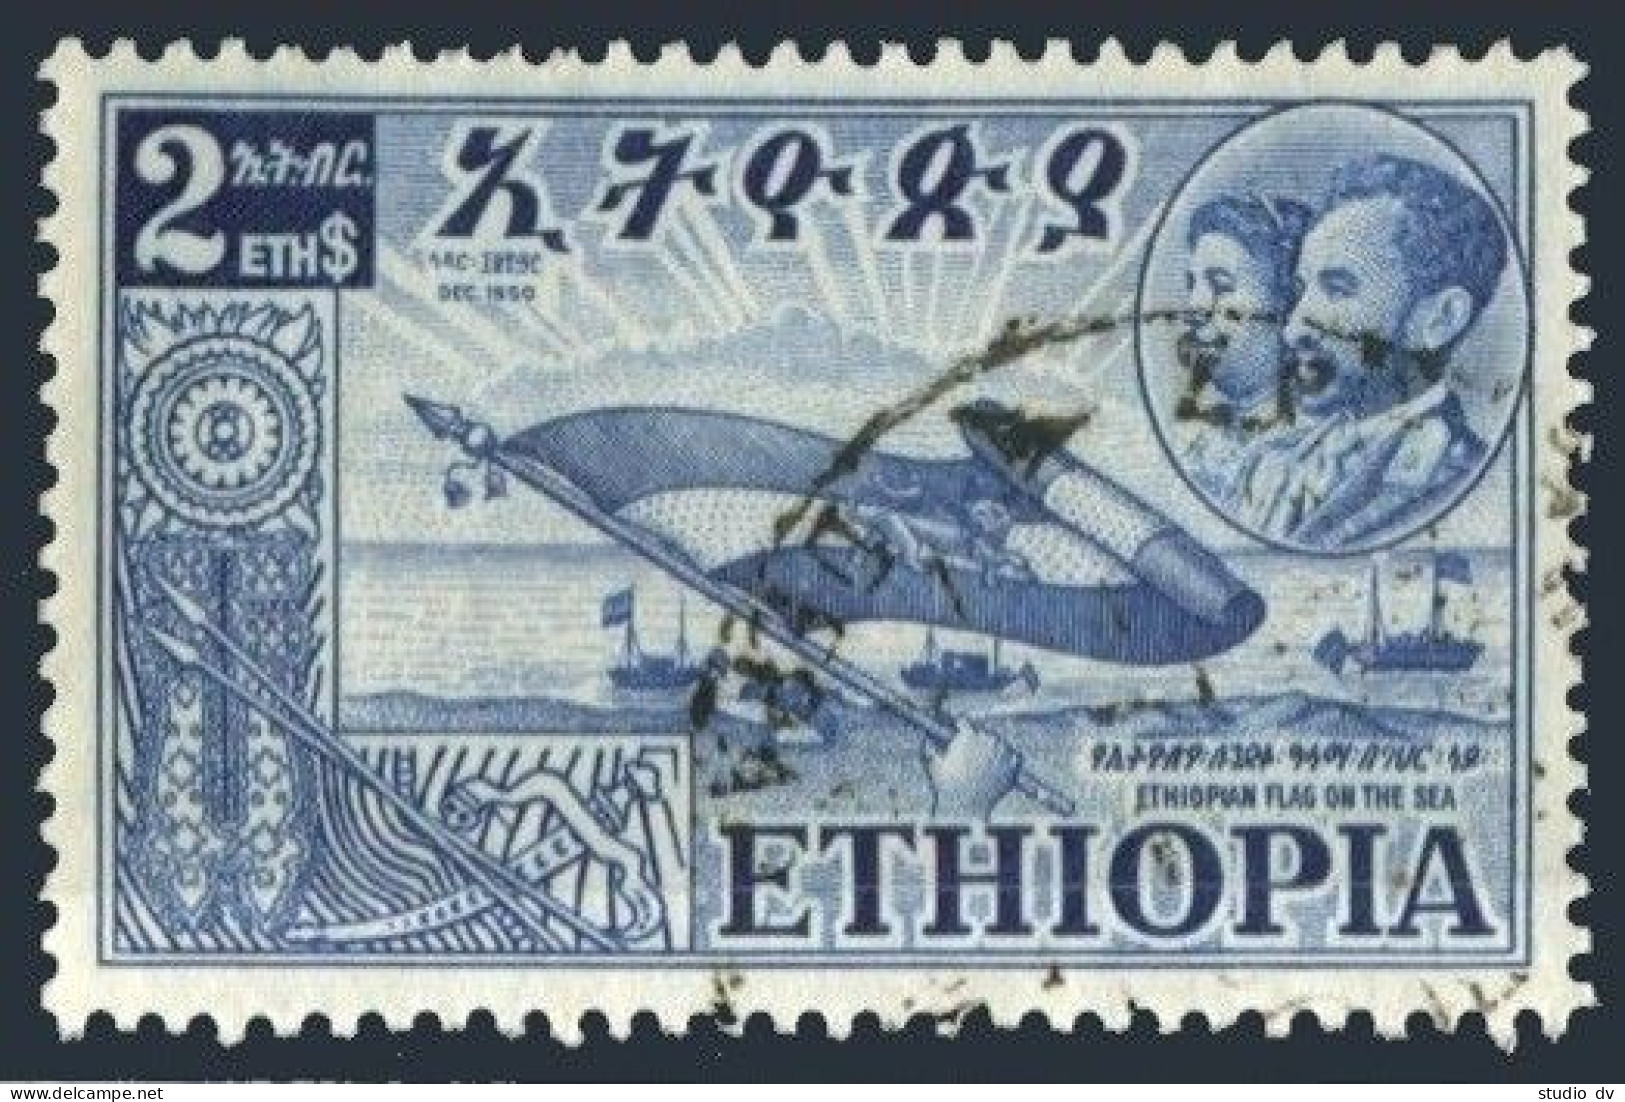 Ethiopia 334, Used. Michel 325. Federation With Eritrea.1952. Flag And Seascape. - Ethiopie